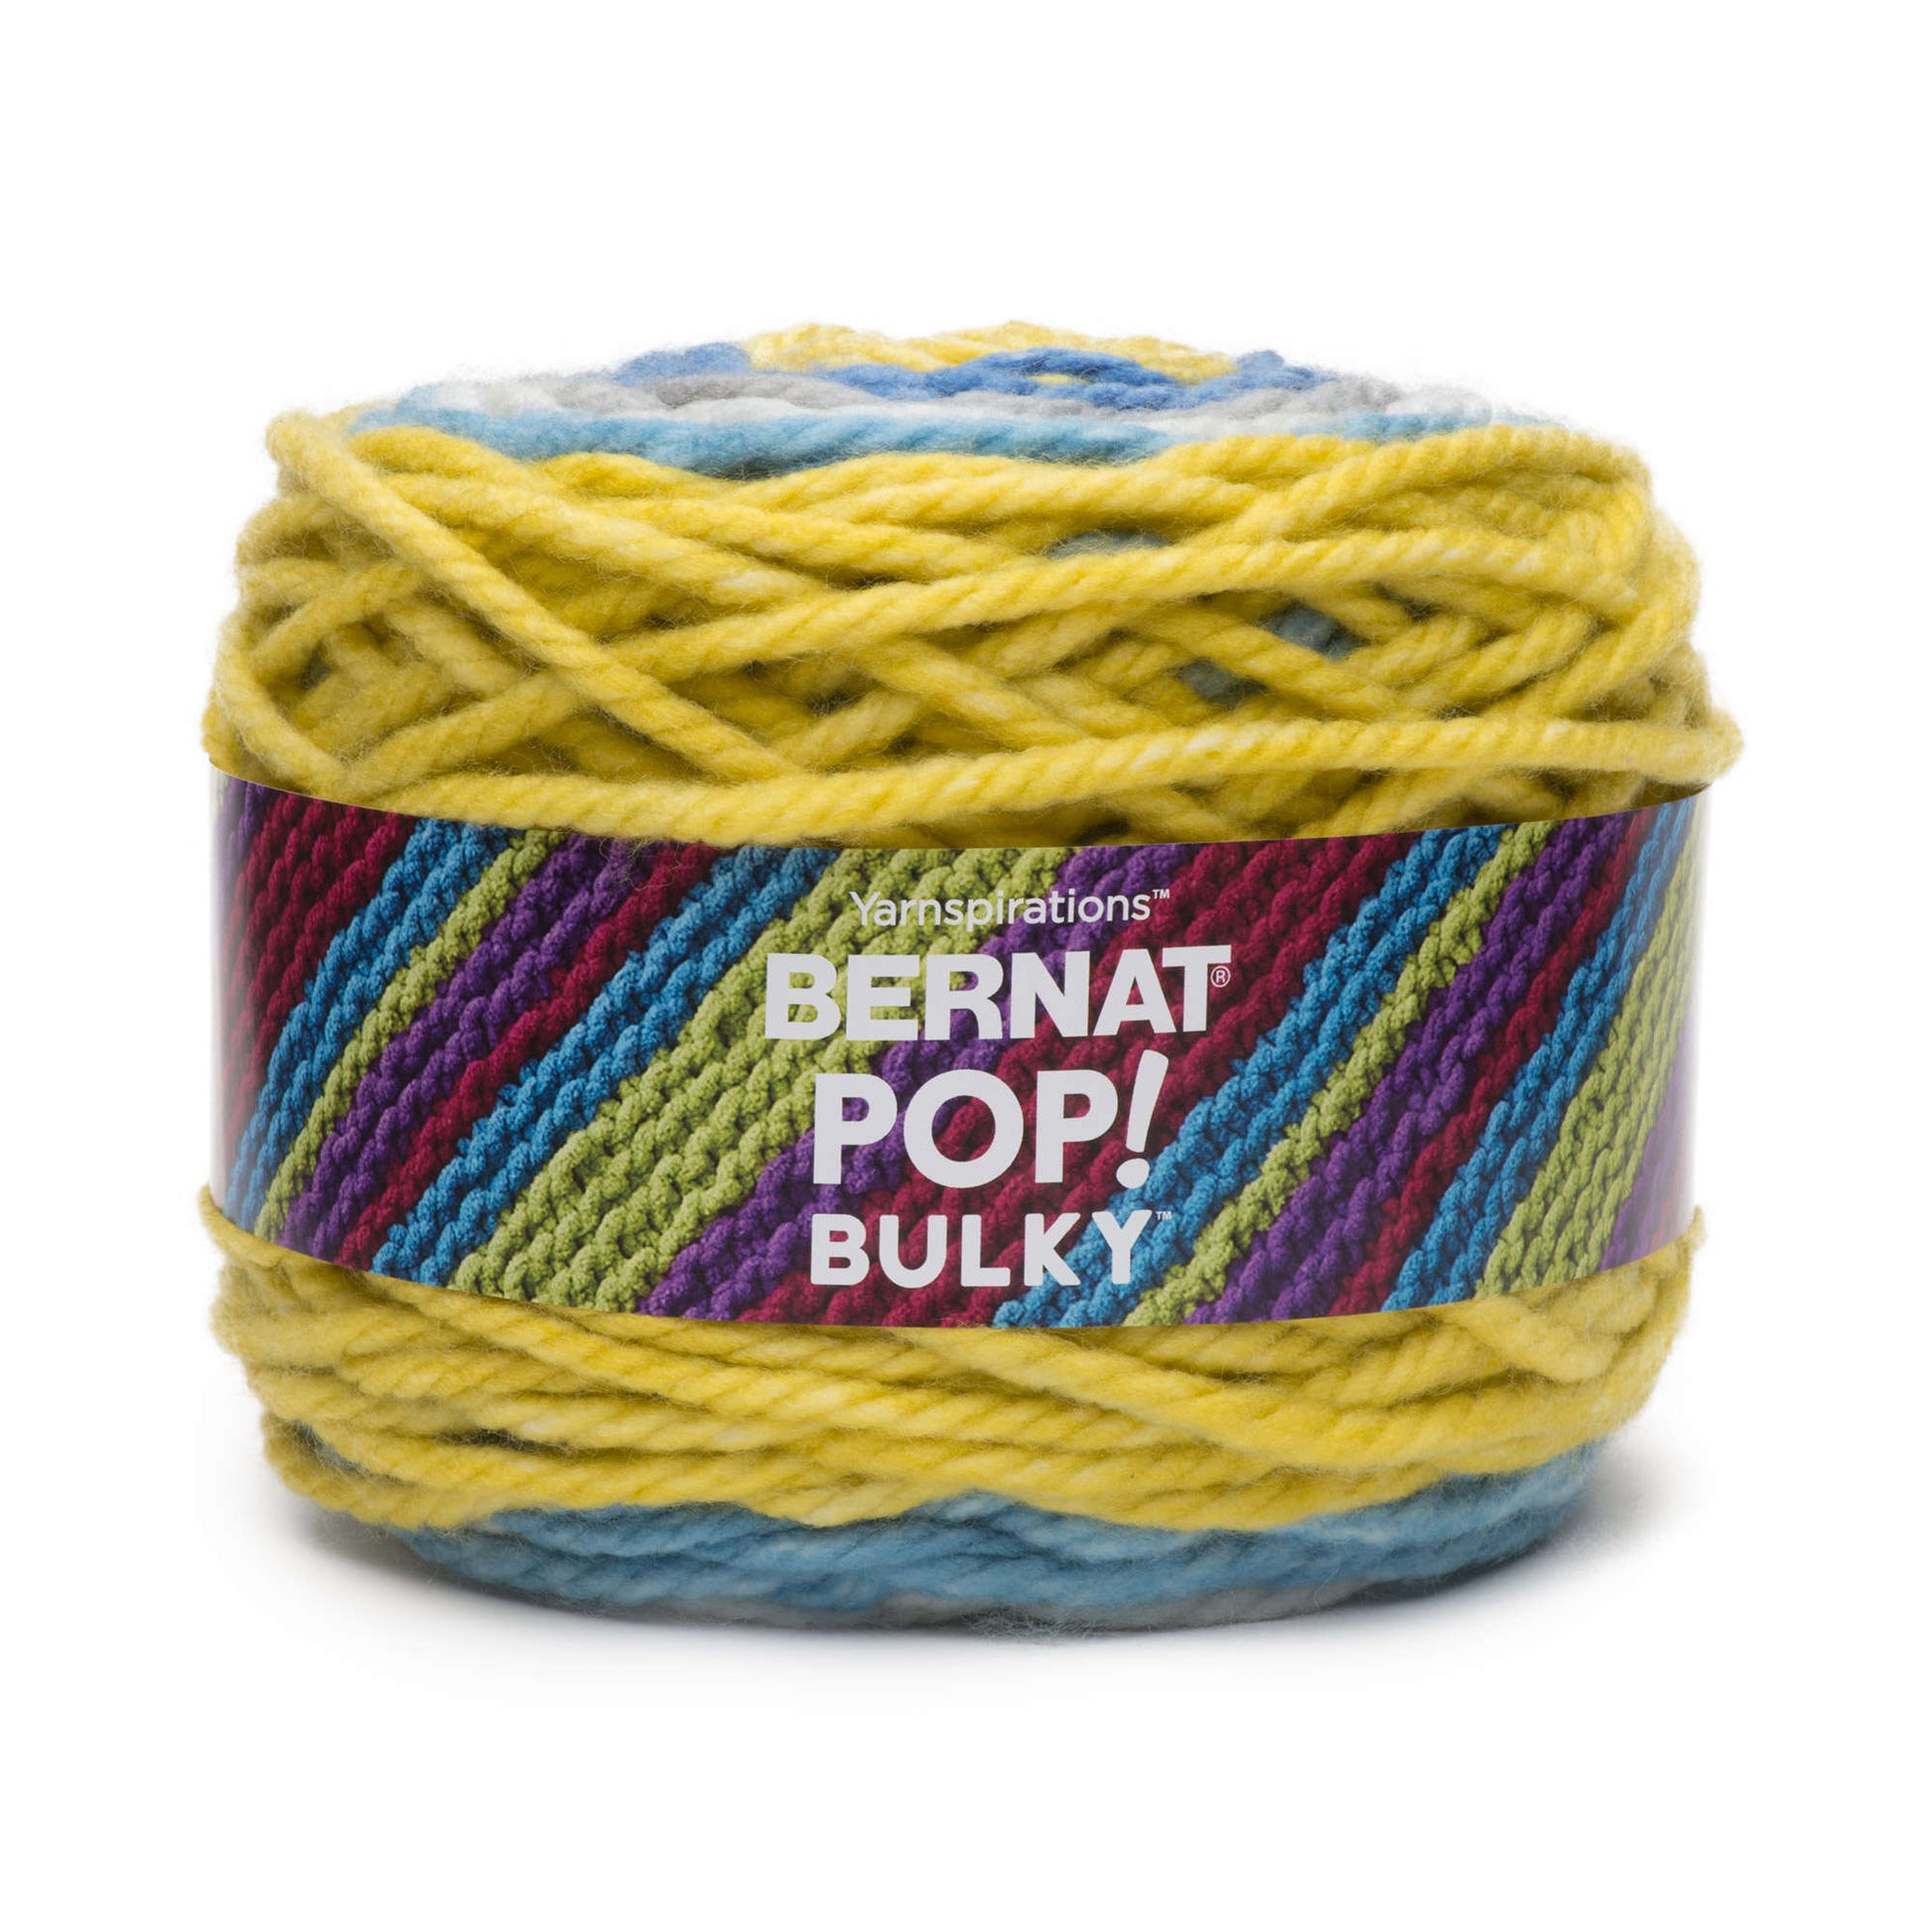 Bernat POP! 2pk Super Bulky Acrylic Yarn by Bernat